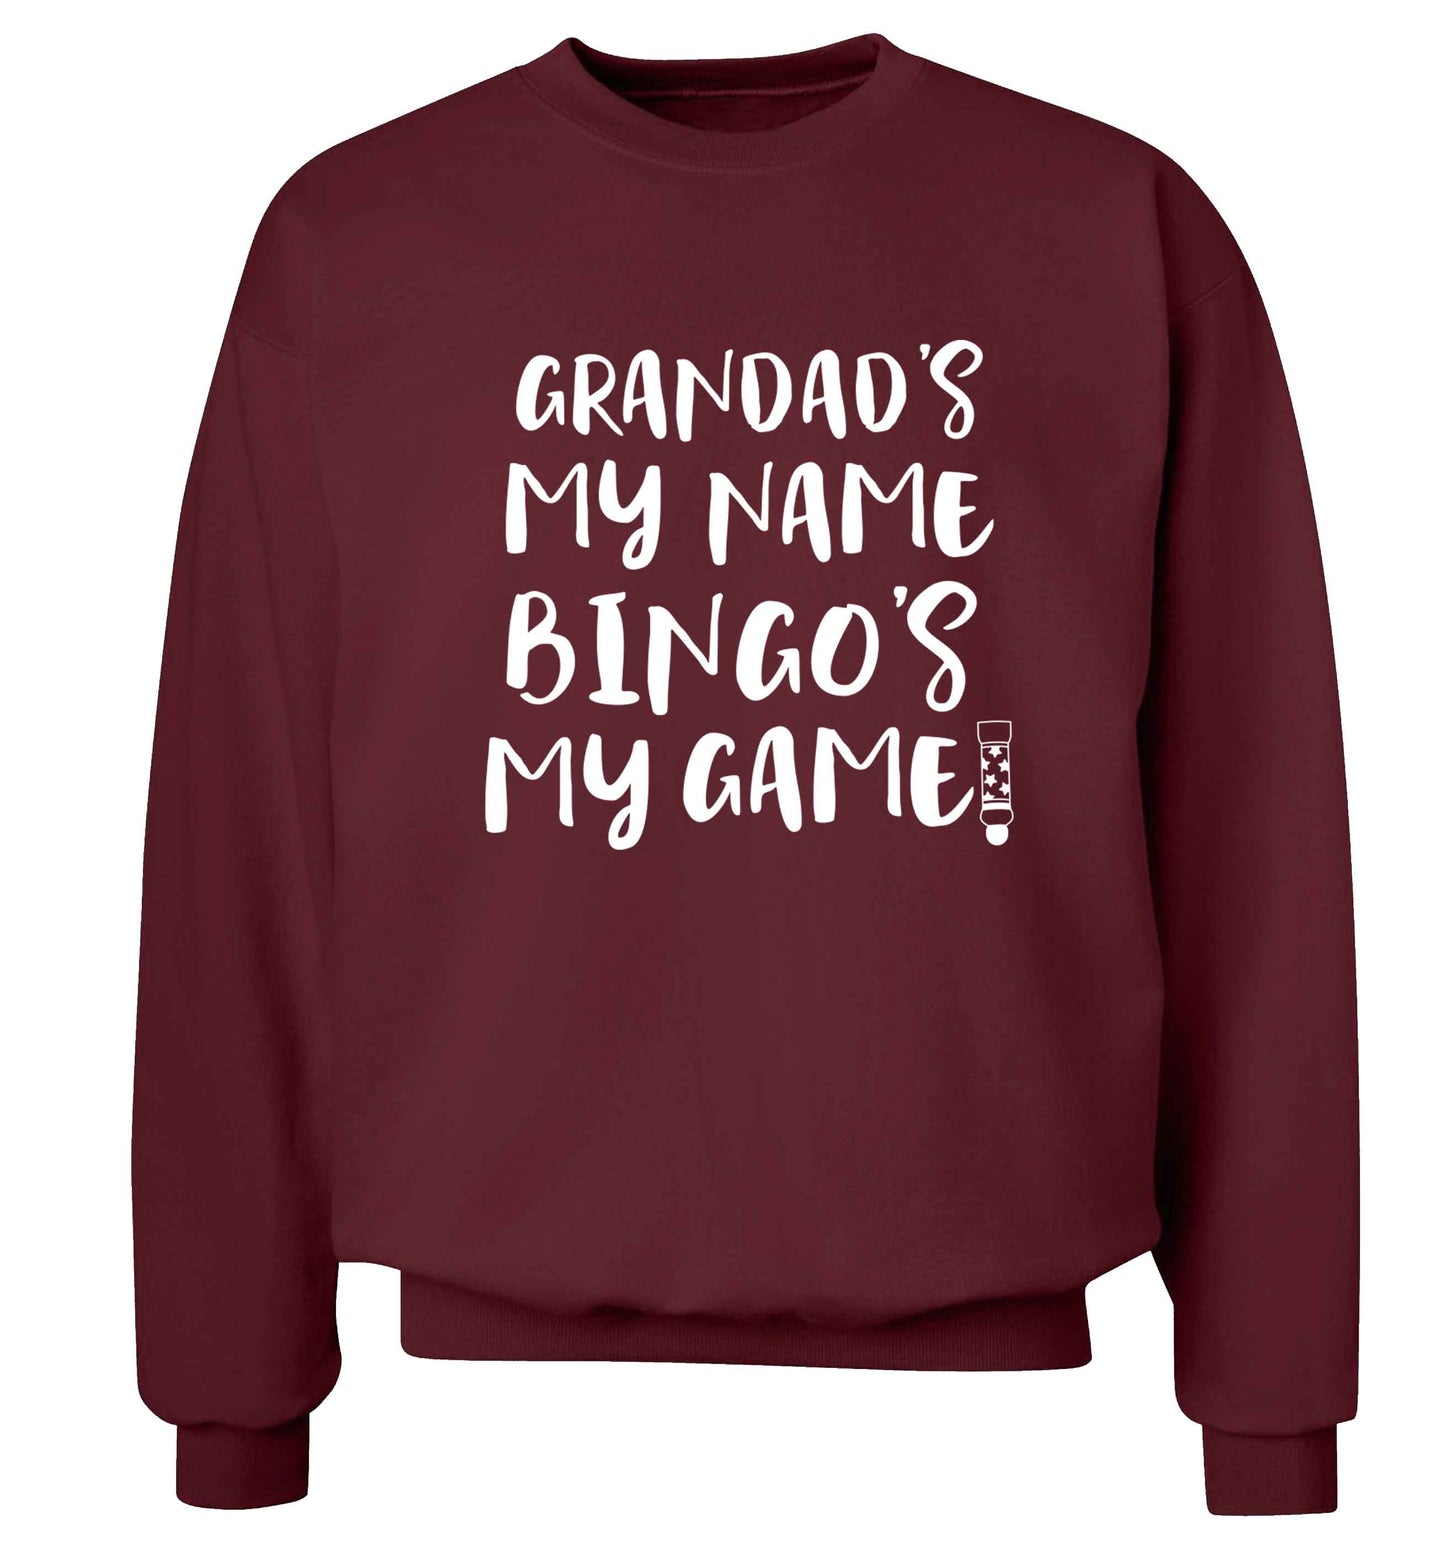 Grandad's my name bingo's my game! Adult's unisex maroon Sweater 2XL